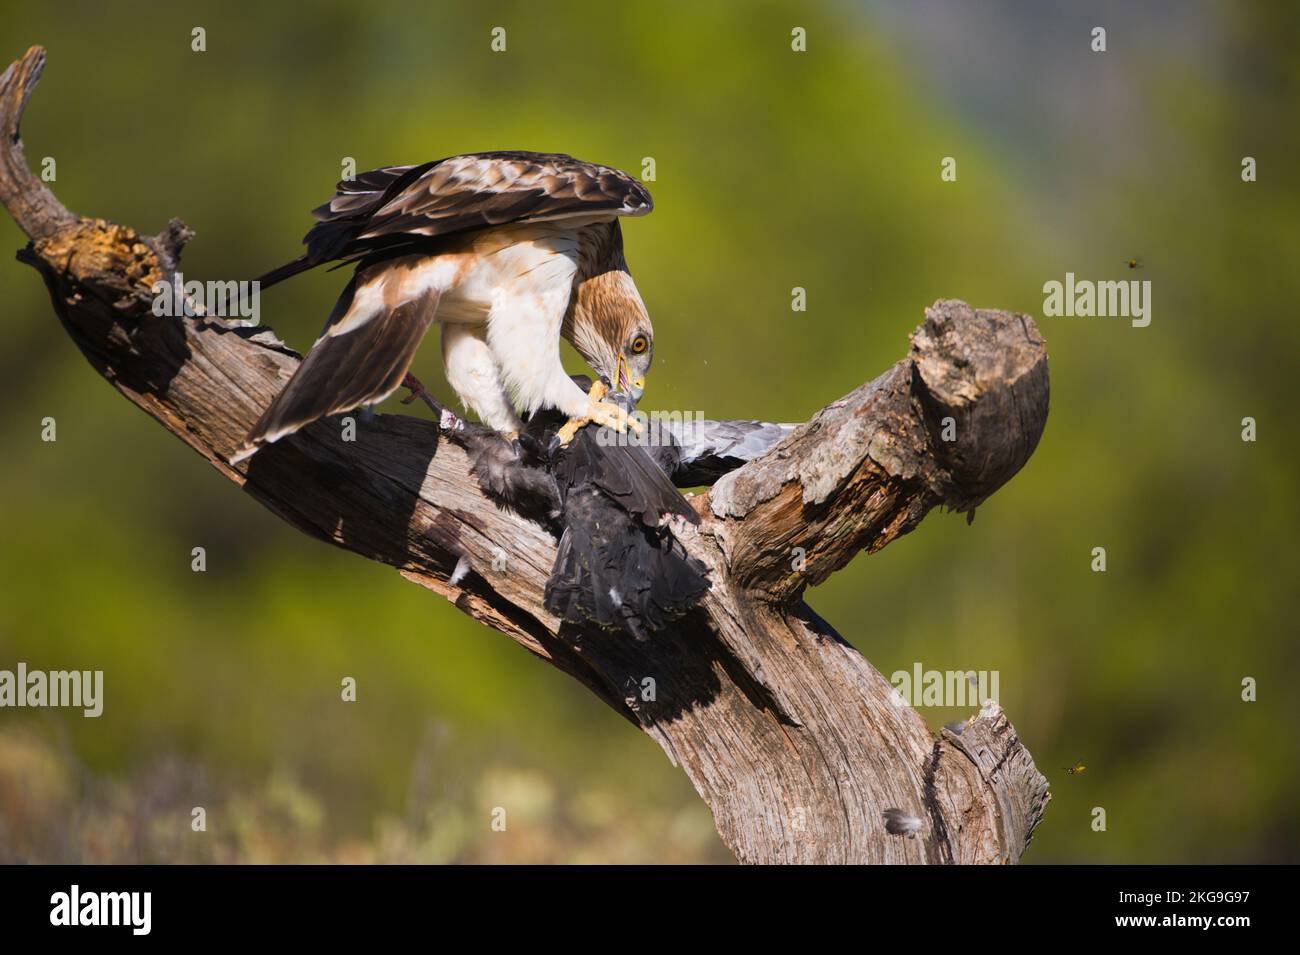 Aguila calzada alimentandose con una paloma Banque D'Images